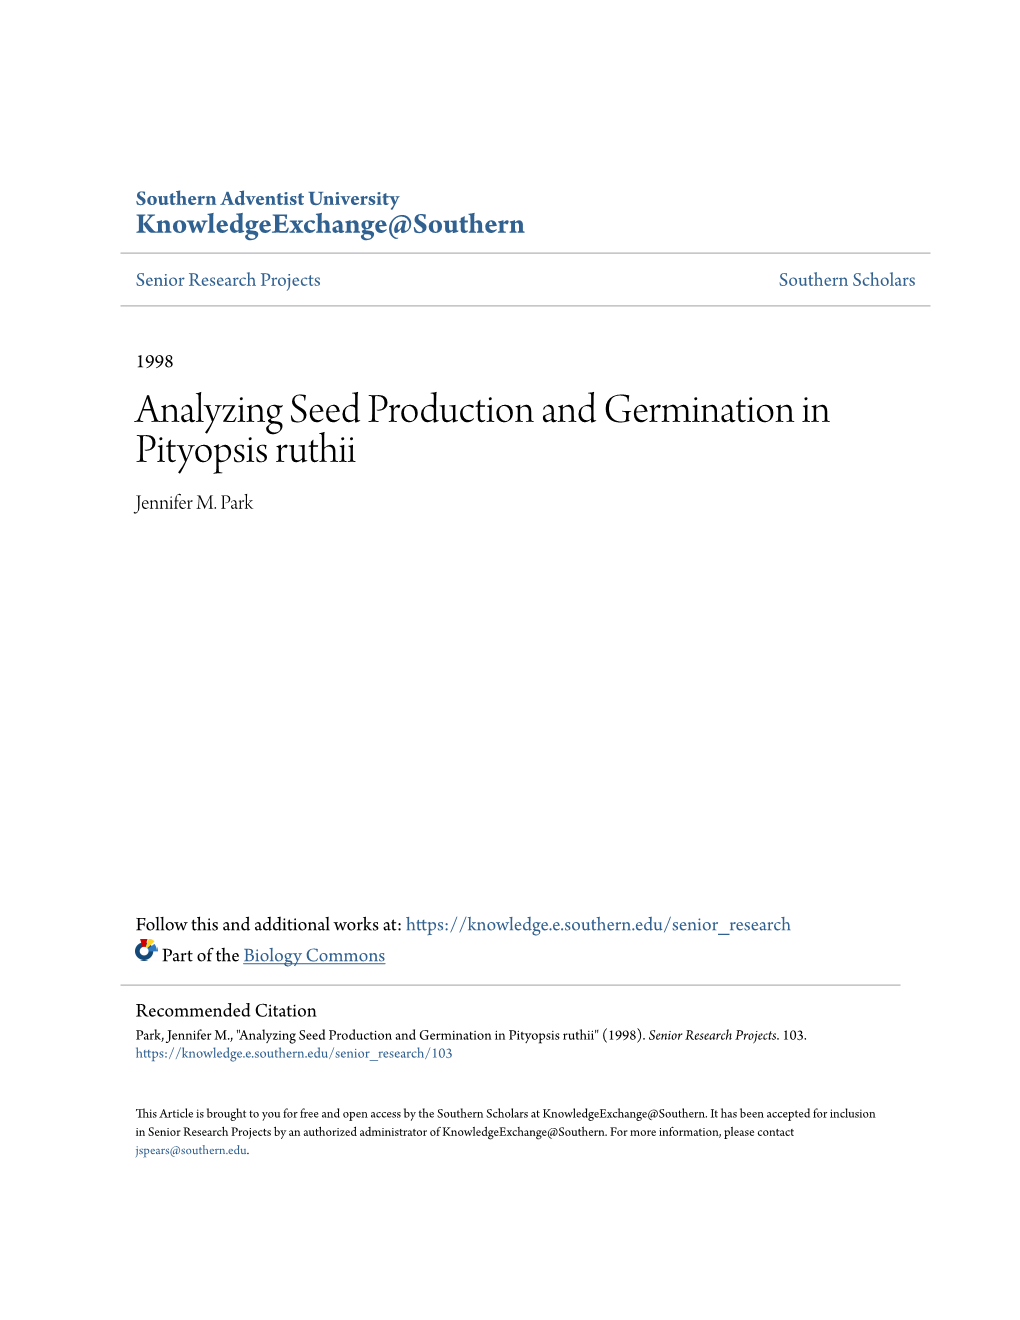 Analyzing Seed Production and Germination in Pityopsis Ruthii Jennifer M